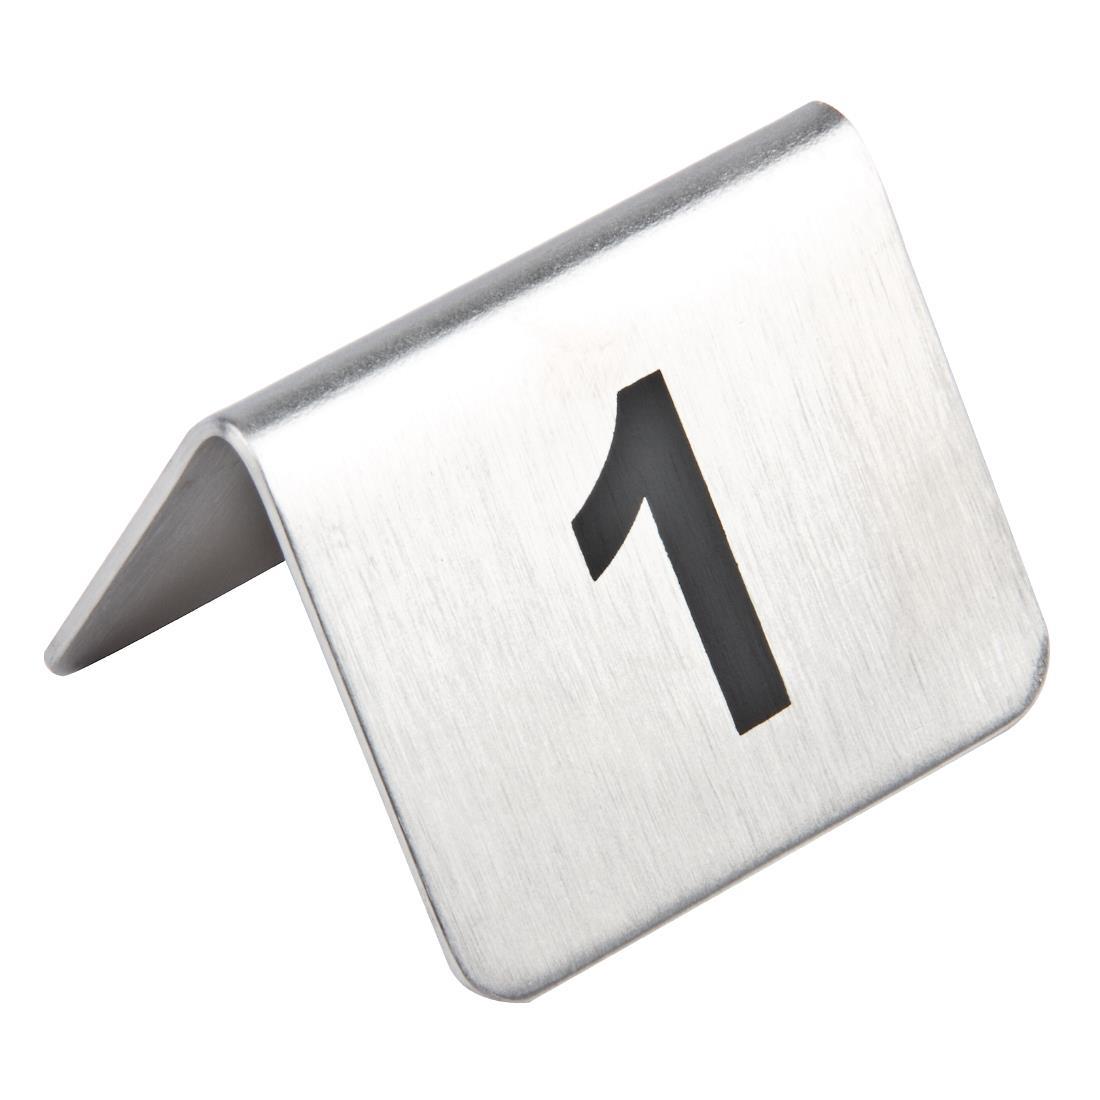 Stainless Steel Table Numbers 1-10 (Pack of 10) - U046  - 1